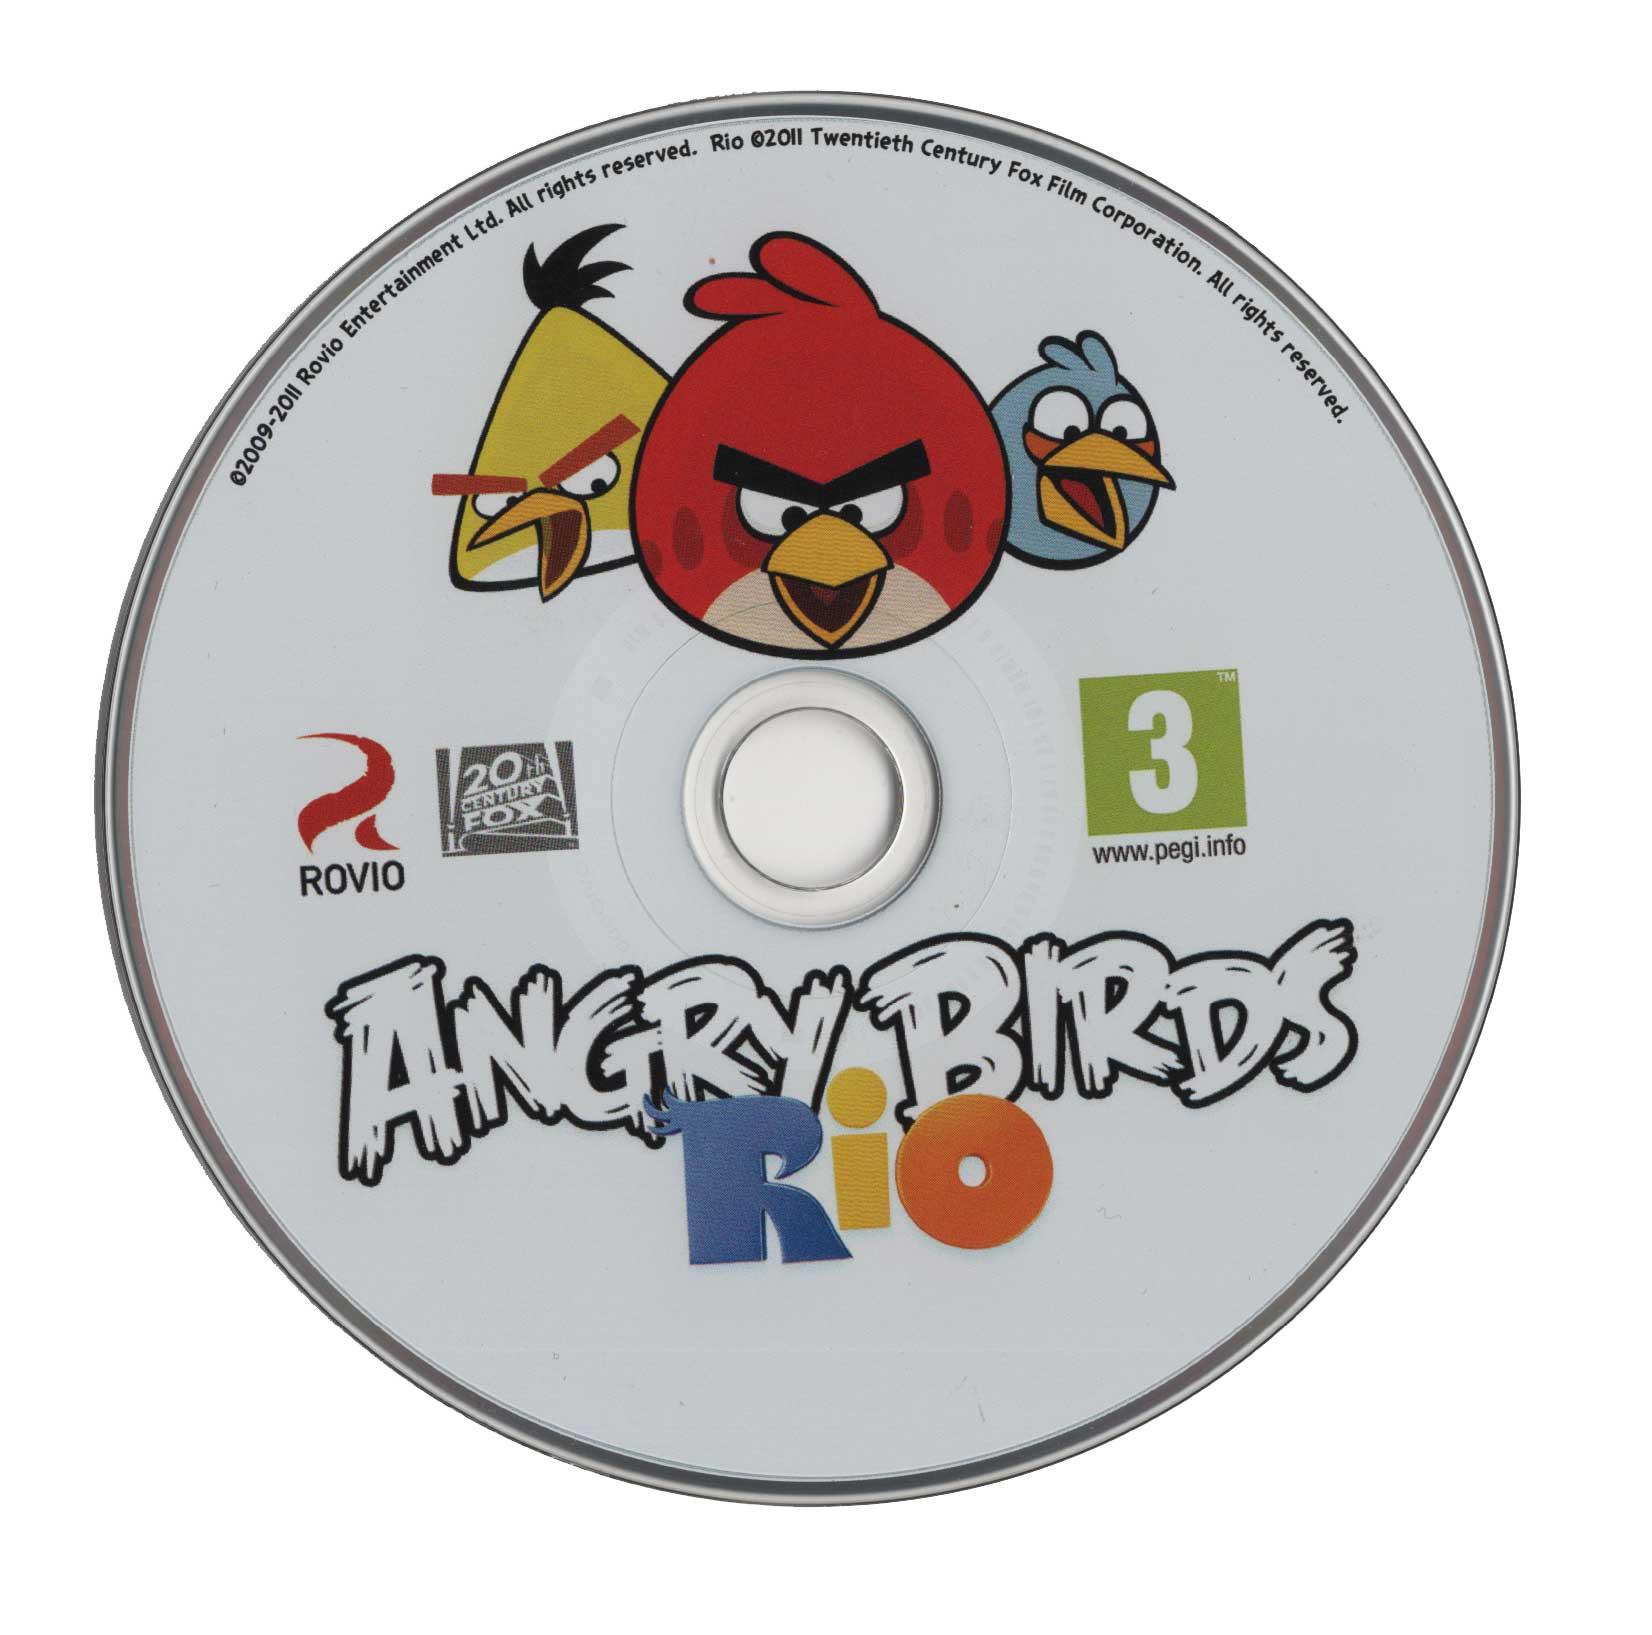 Angry Birds Rio - Classic Windows PC Game